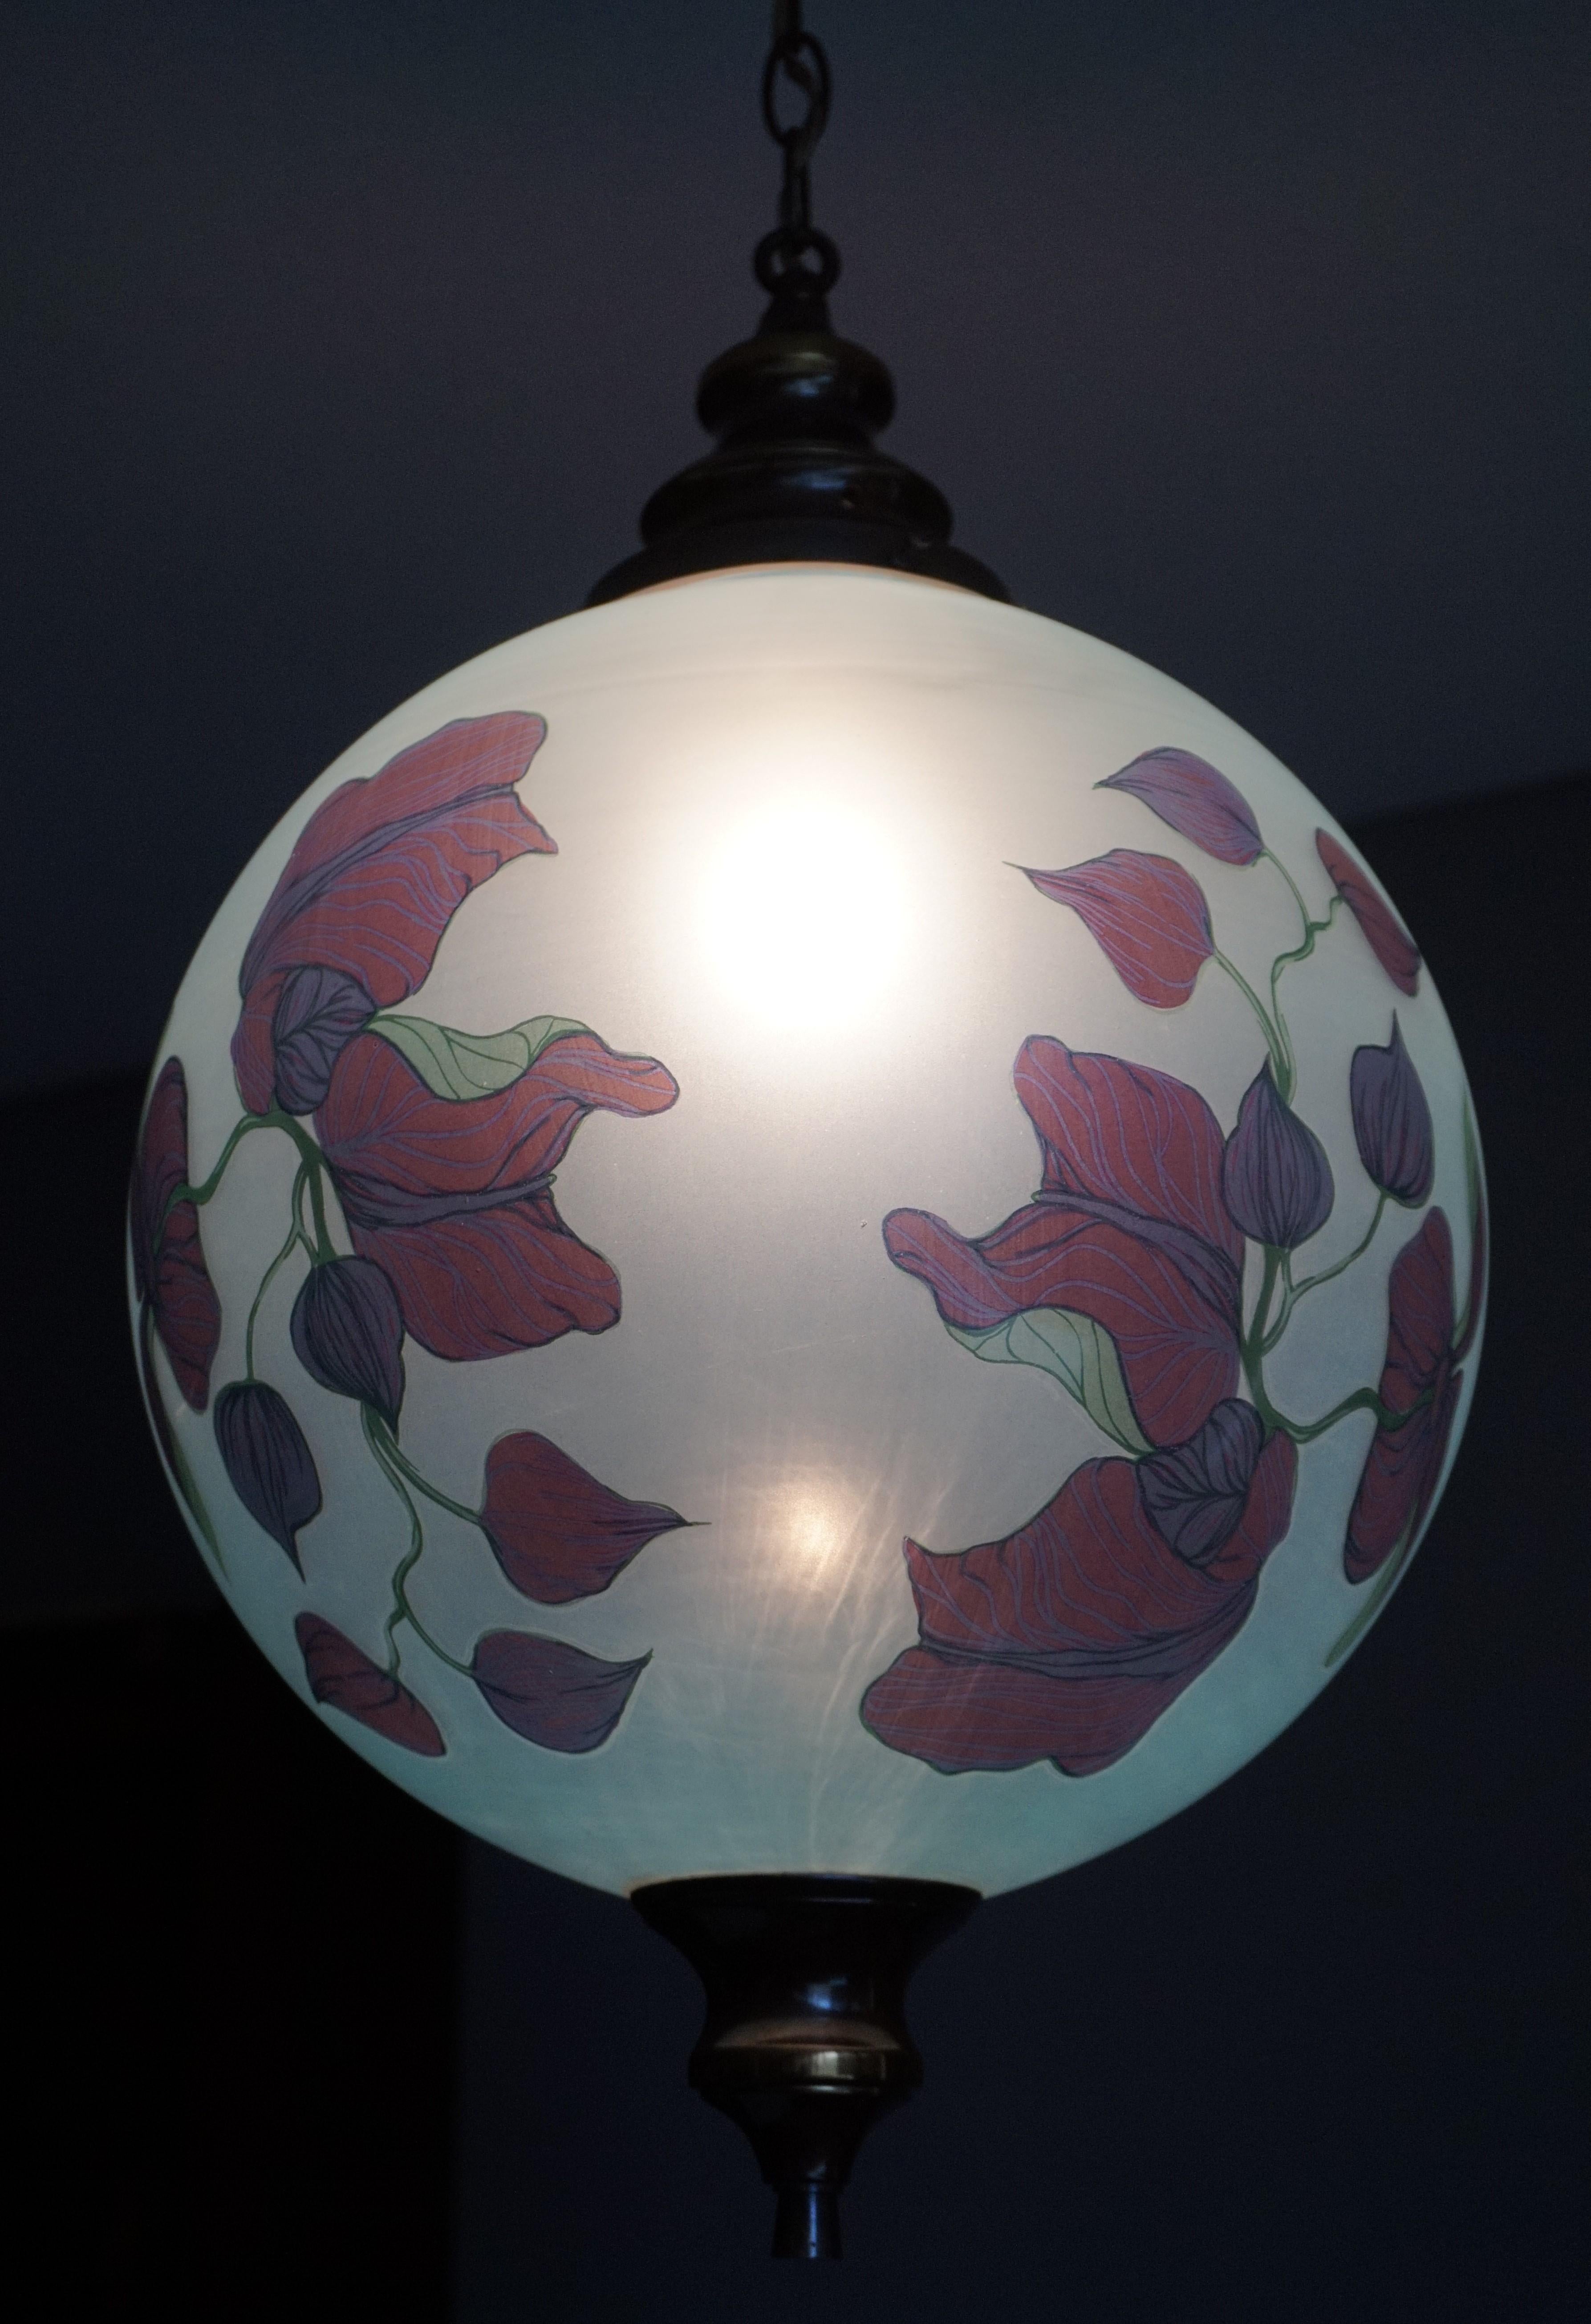 European Rare Pair of Midcentury Made Glass Globe Pendant Lights with Jugendstil Flowers